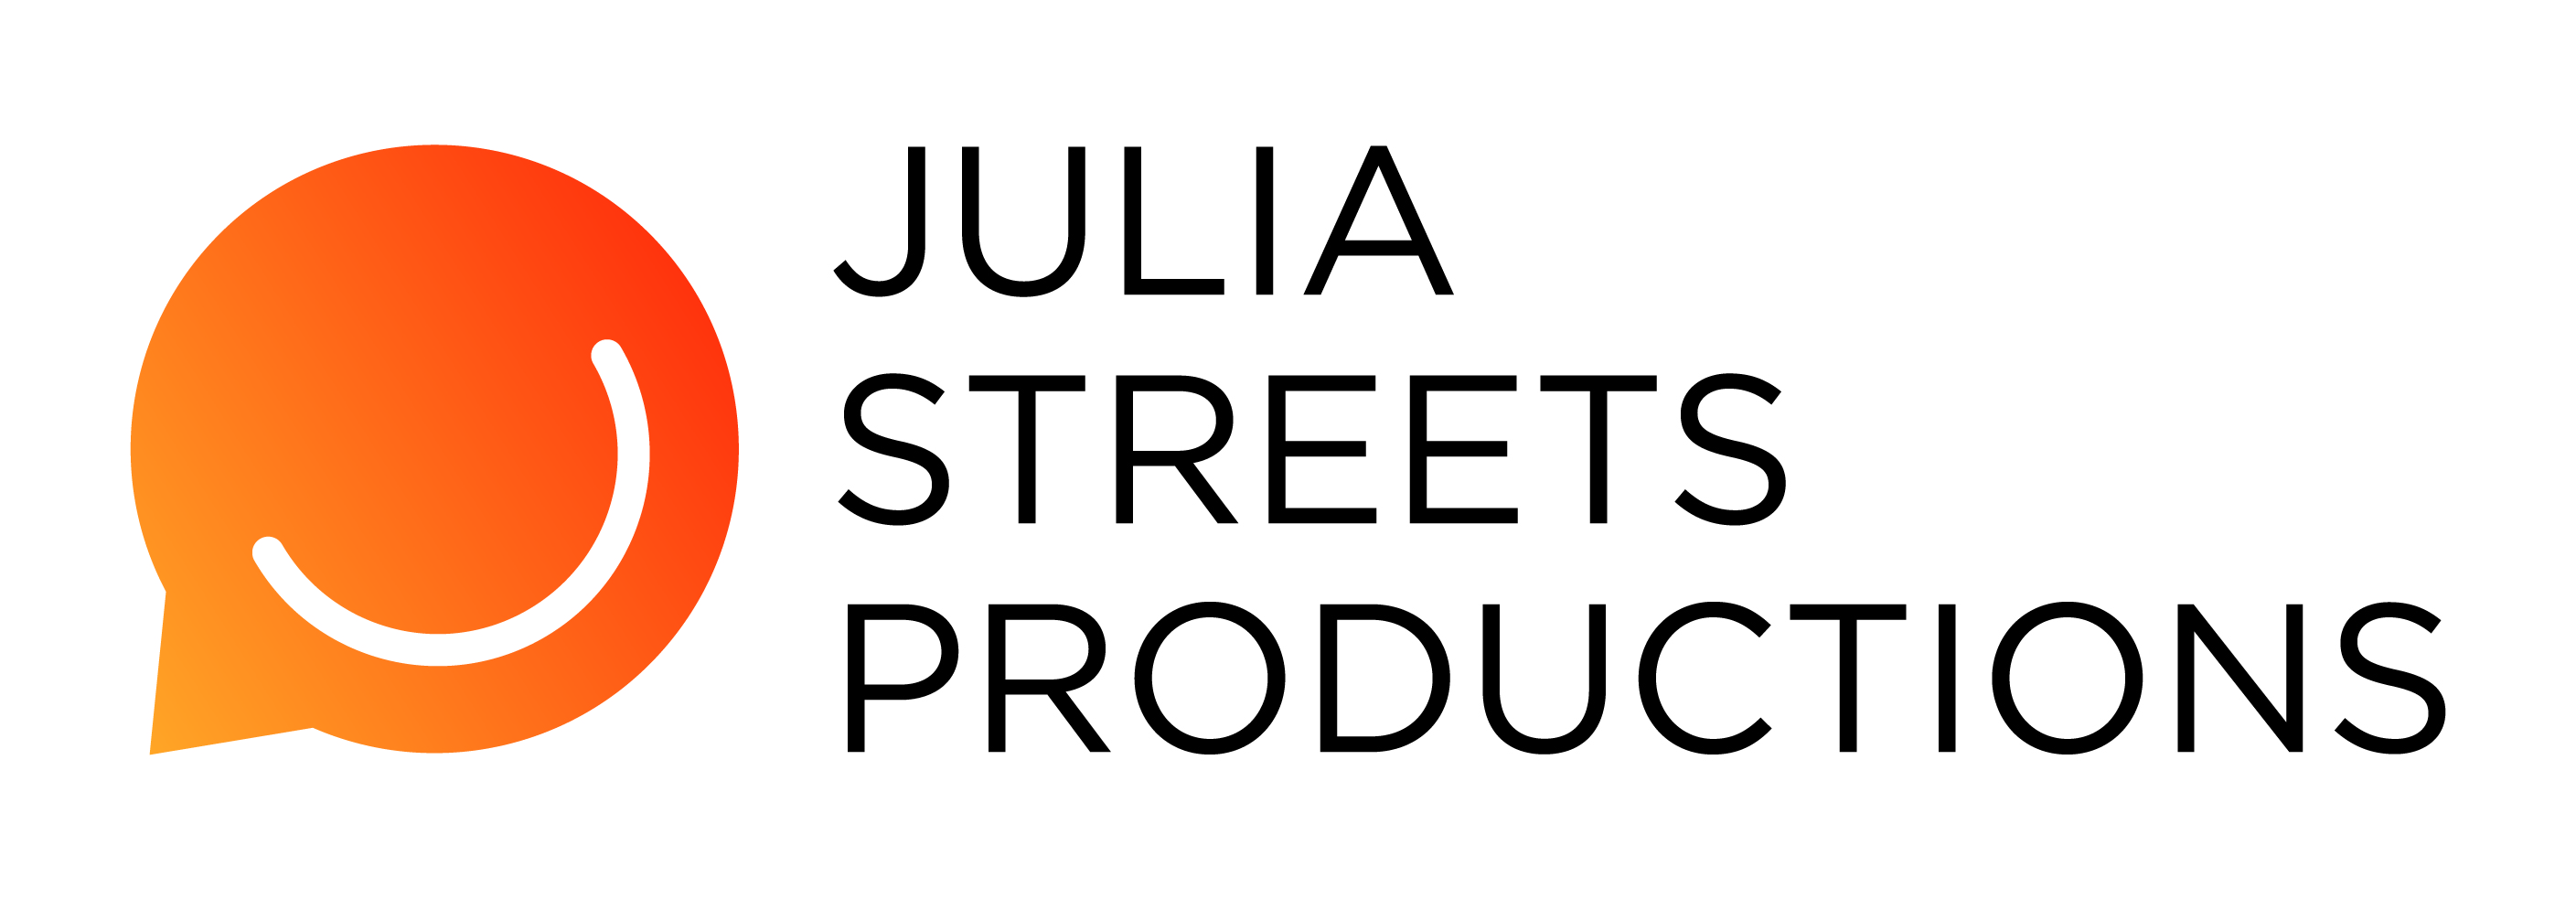 Julia Streets Productions